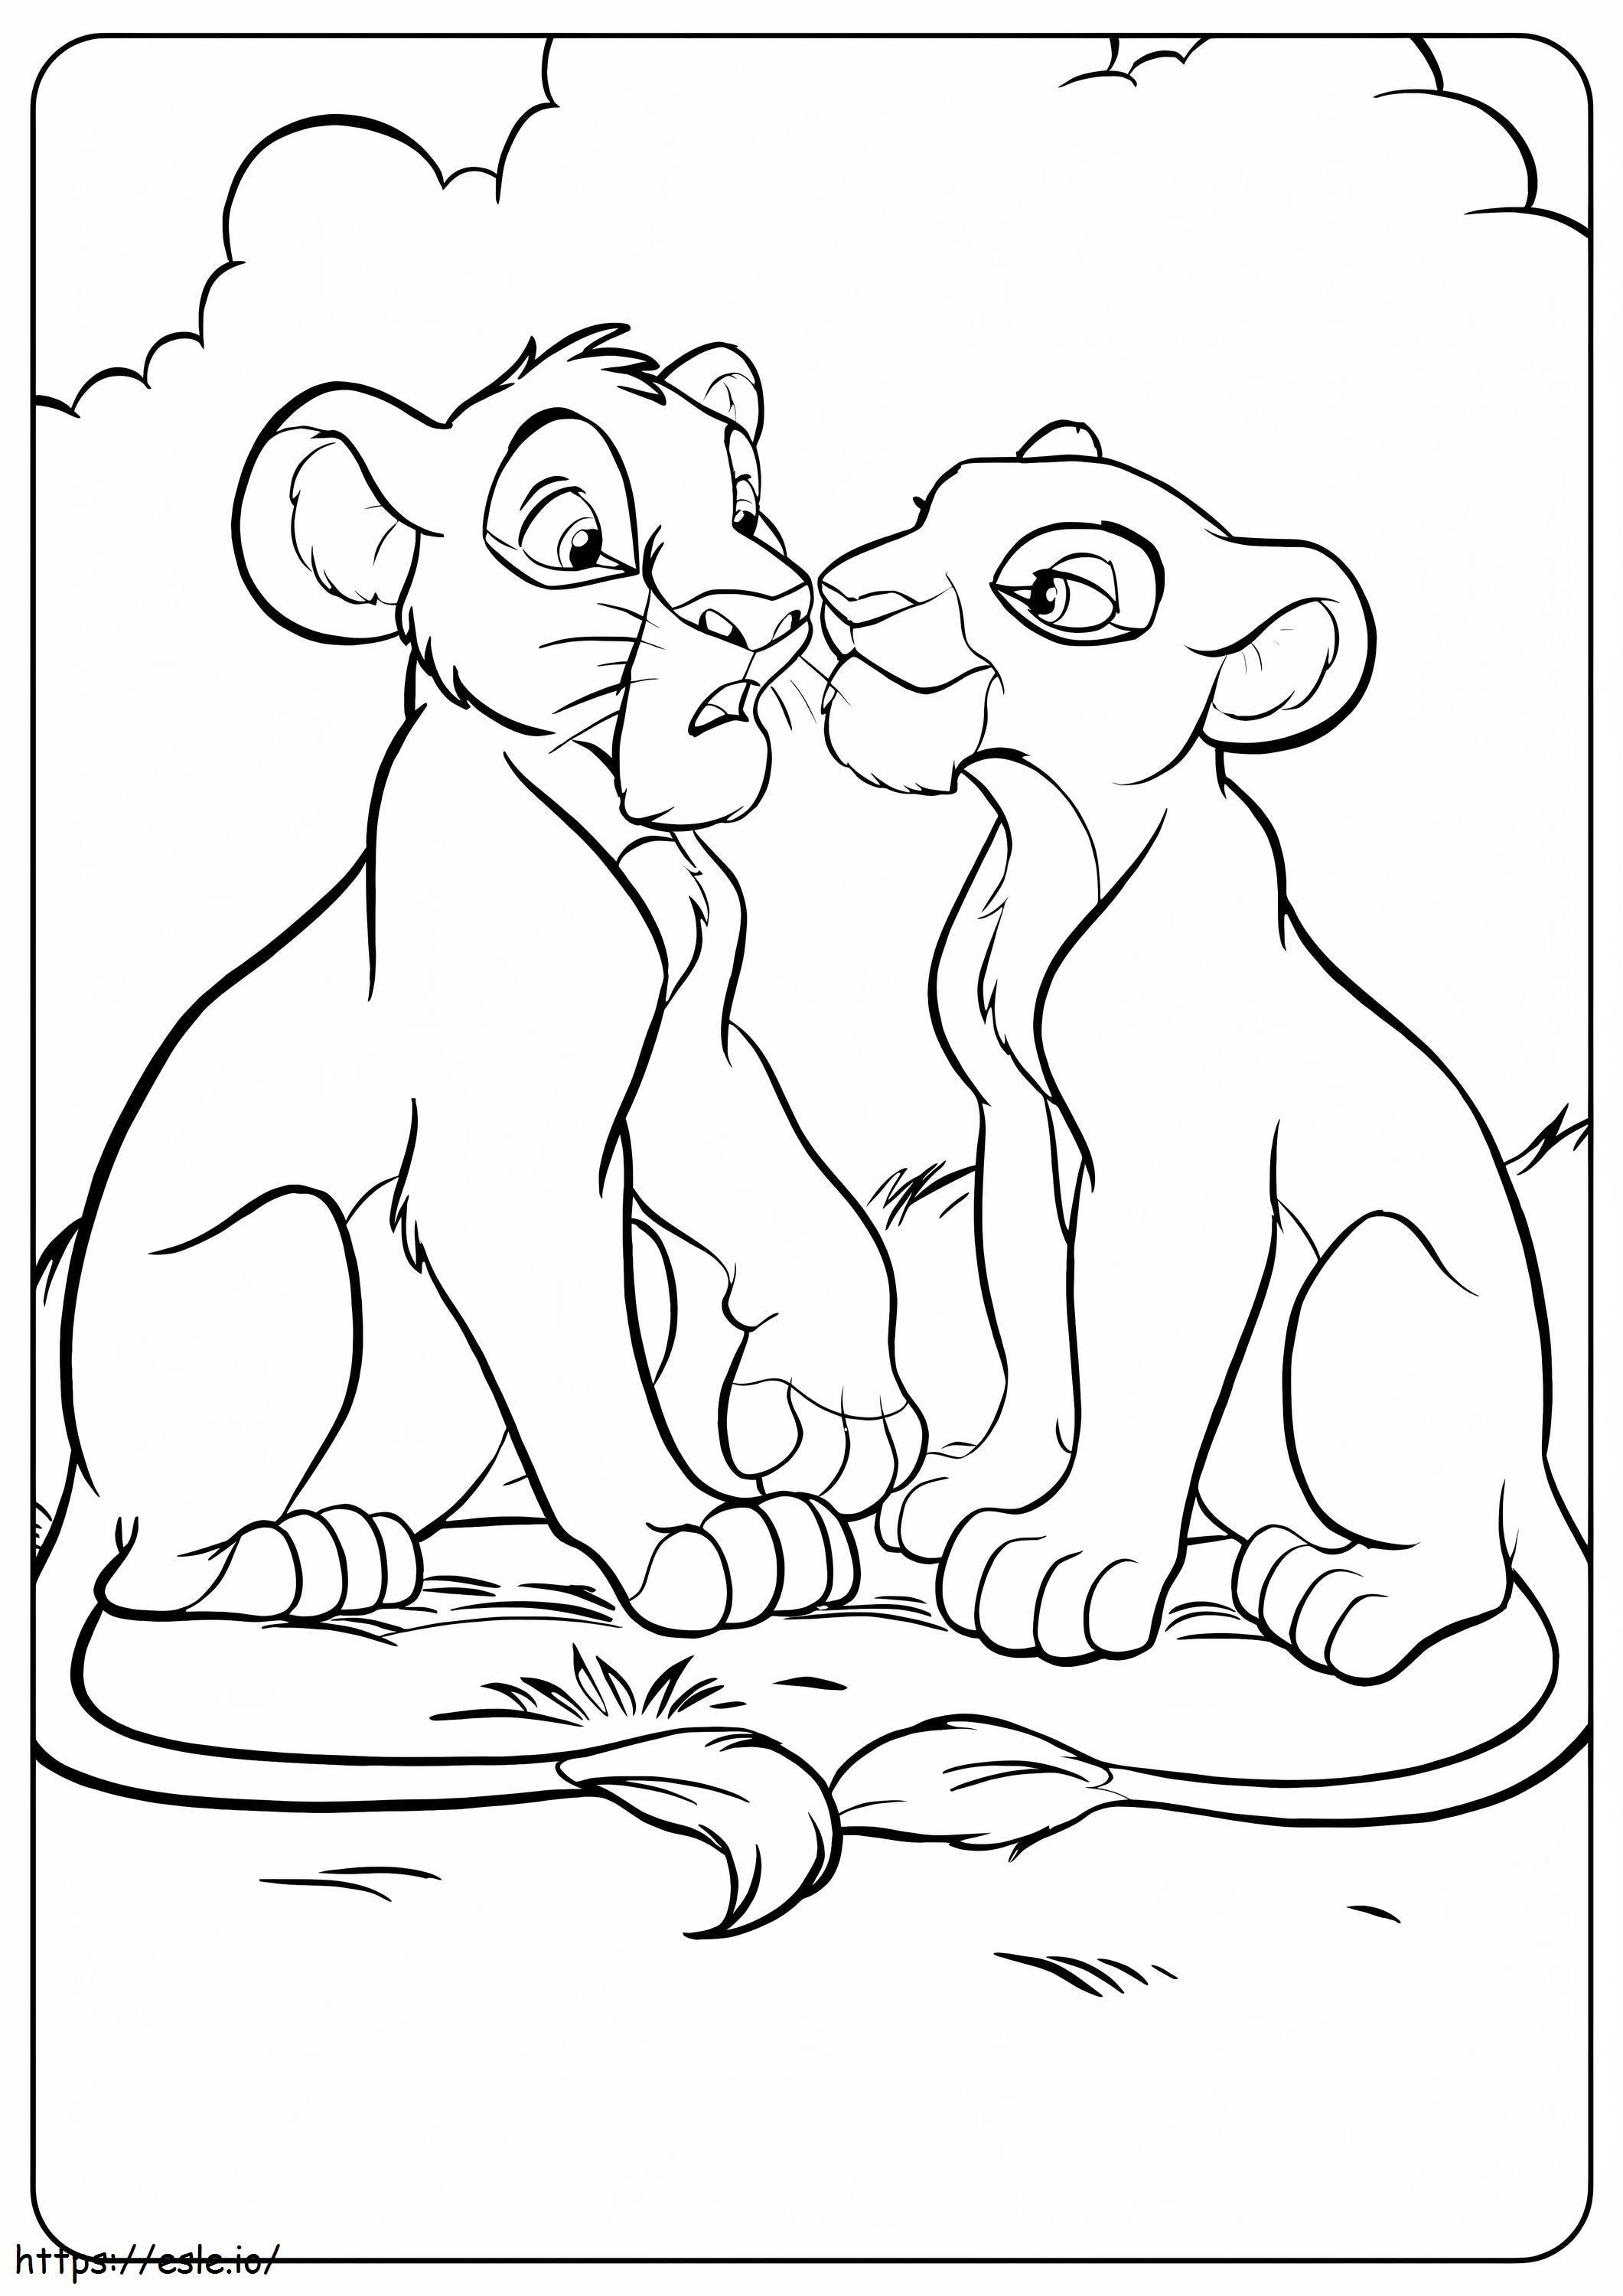 Simba ve Nala Çifti boyama